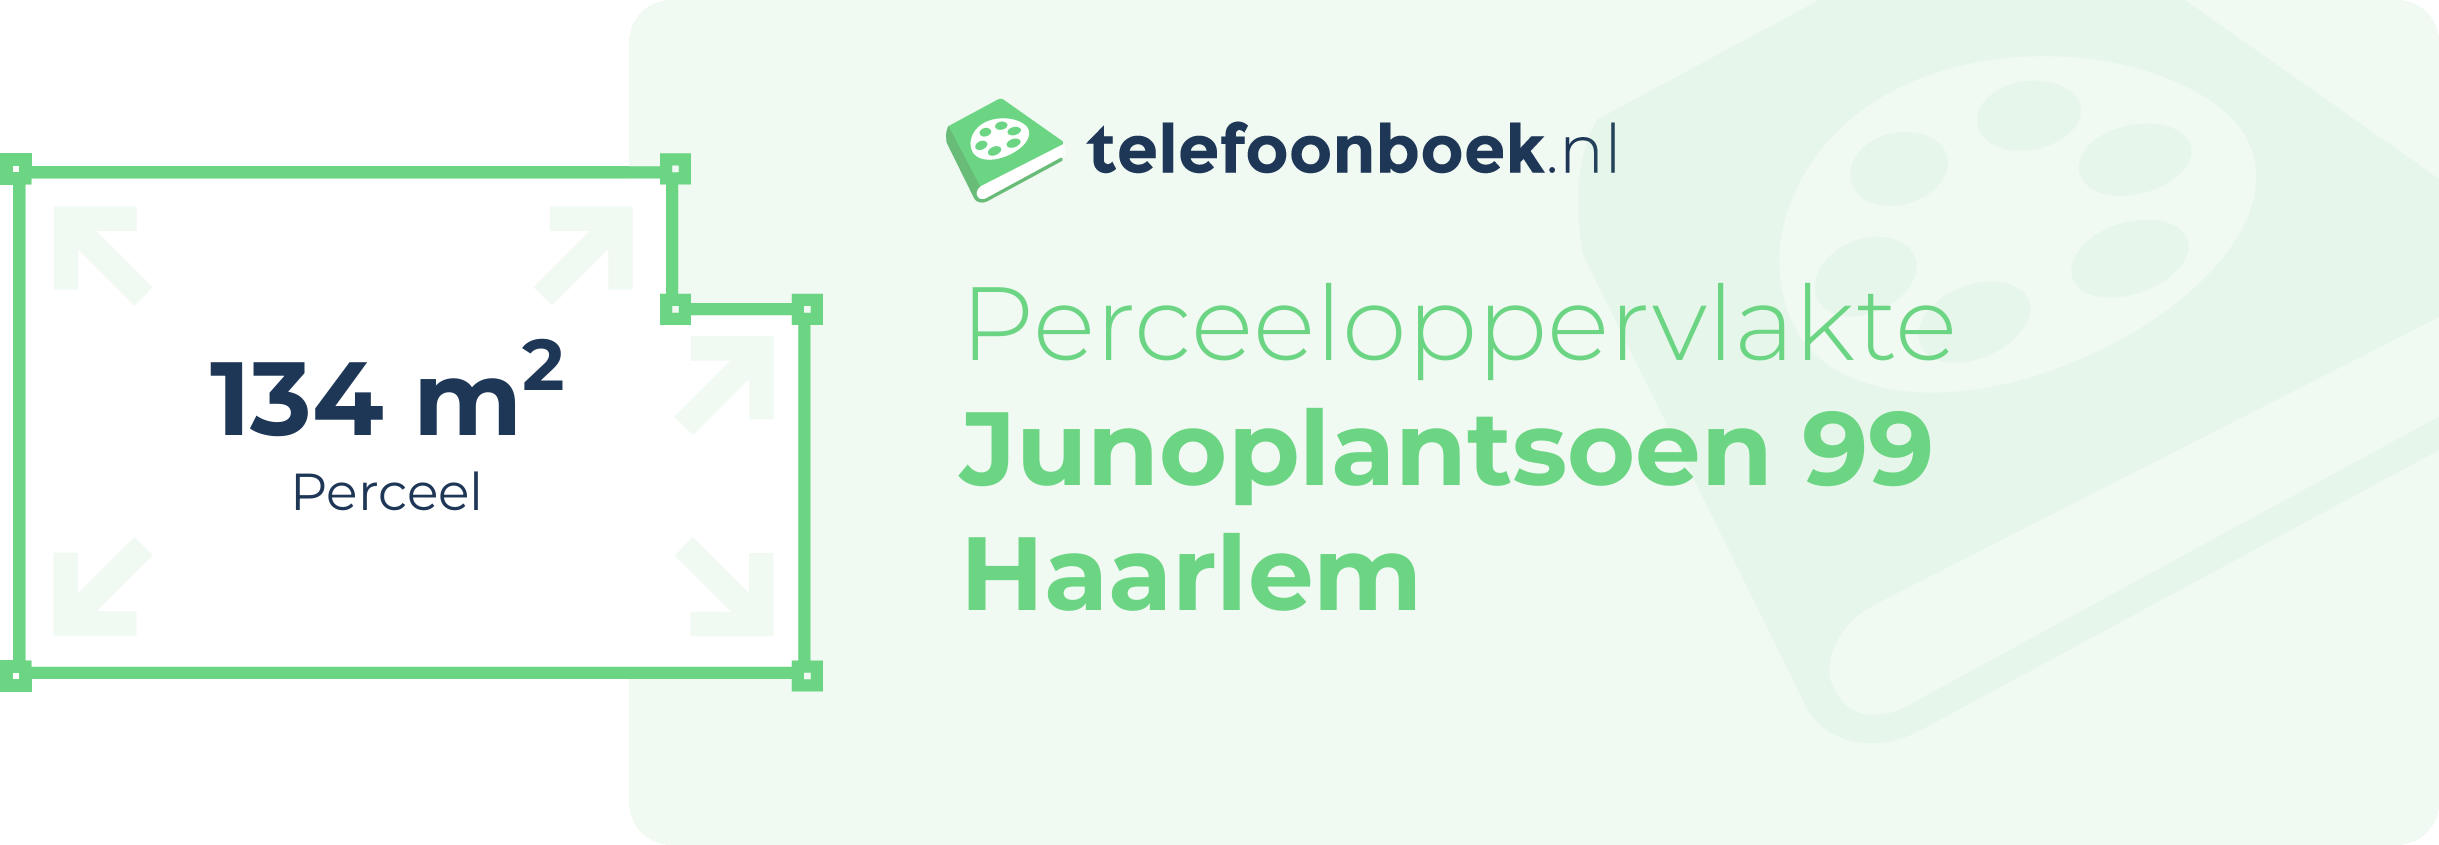 Perceeloppervlakte Junoplantsoen 99 Haarlem